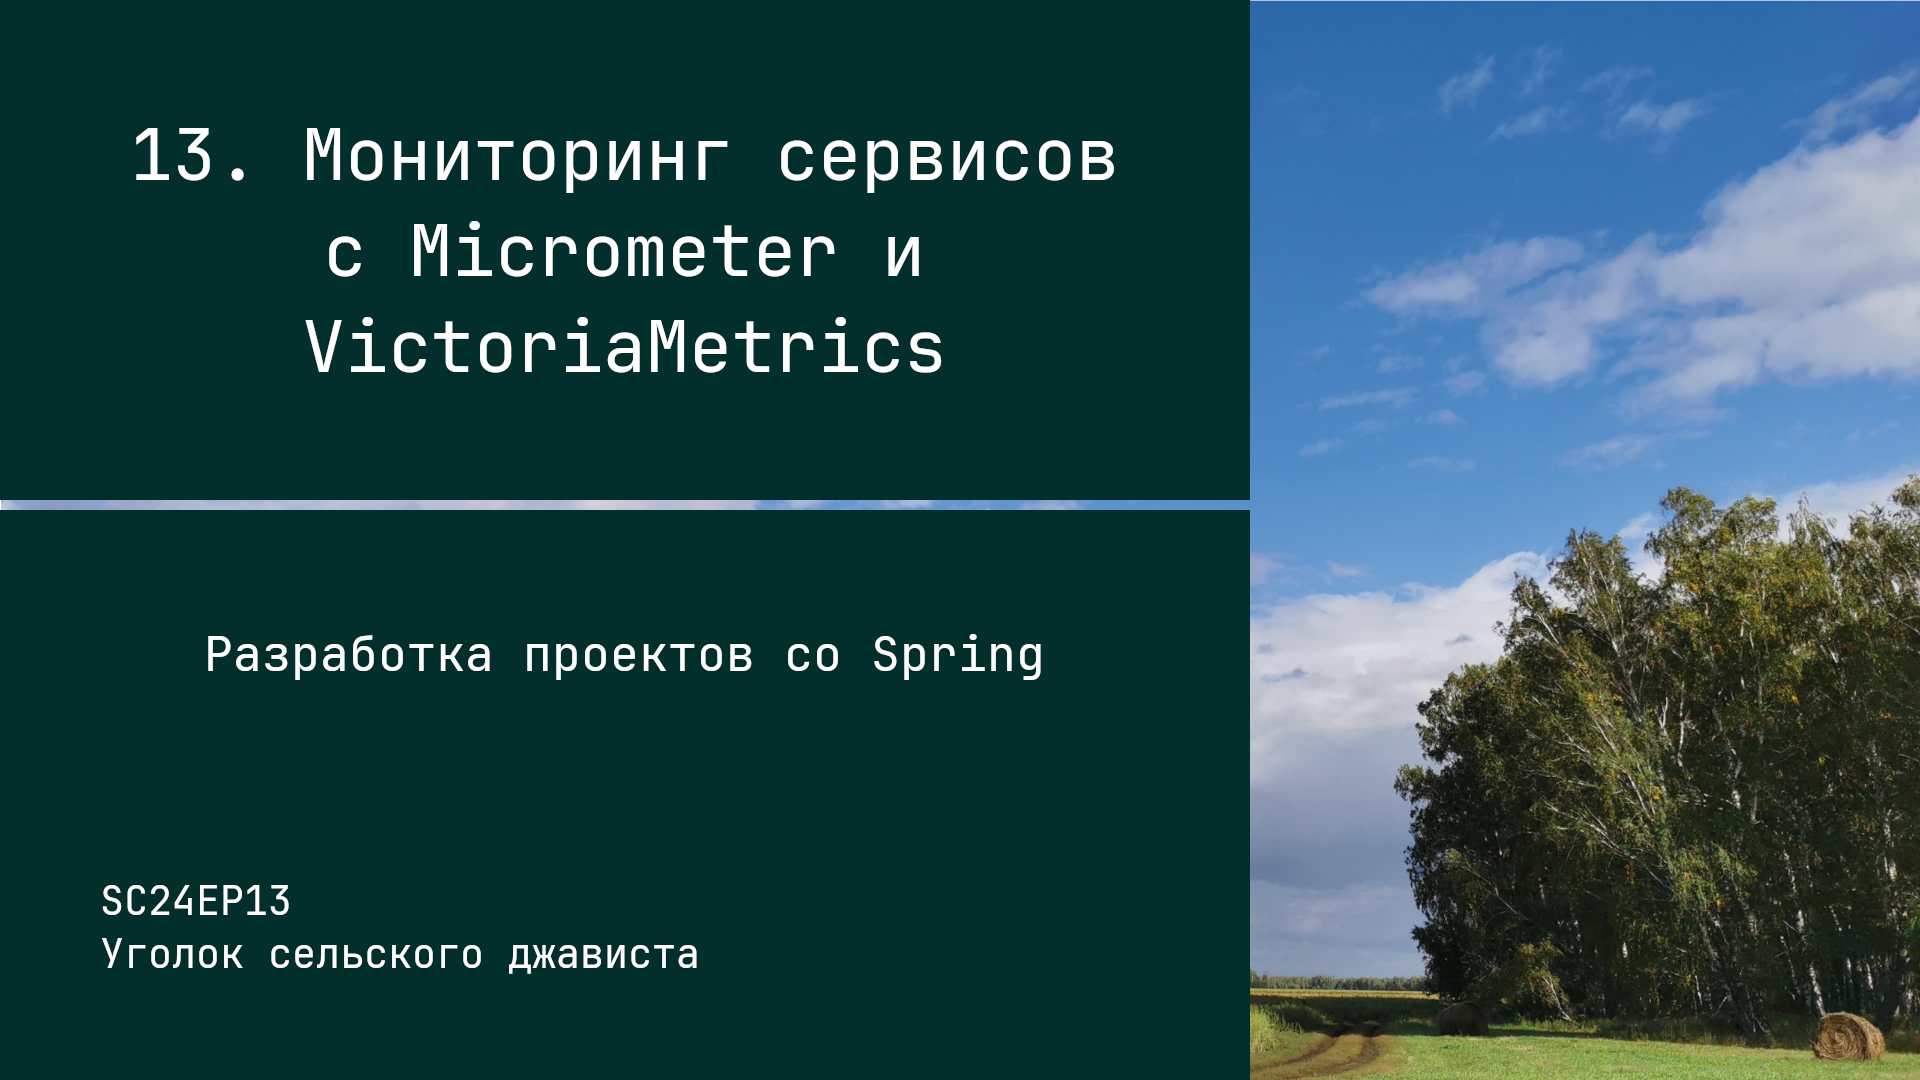 SC24EP13 Мониторинг сервисов с Micrometer и VictoriaMetrics - Разработка проектов со Spring